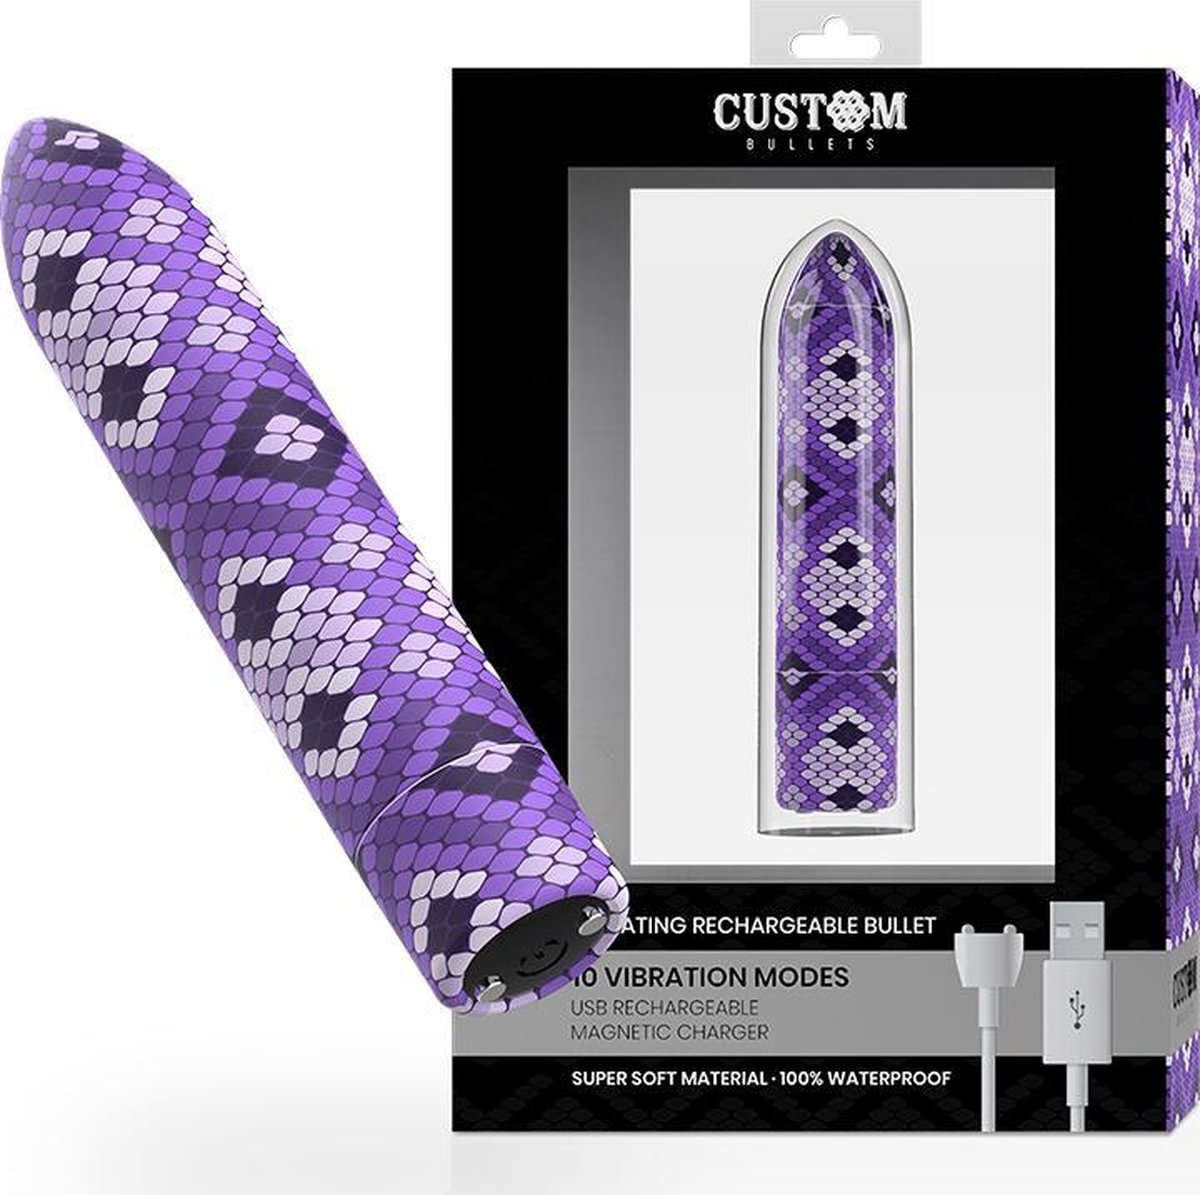 CUSTOM BULLETS | Custom Bullets Rechargeable Bullet Snake Lilac 10 Intensities